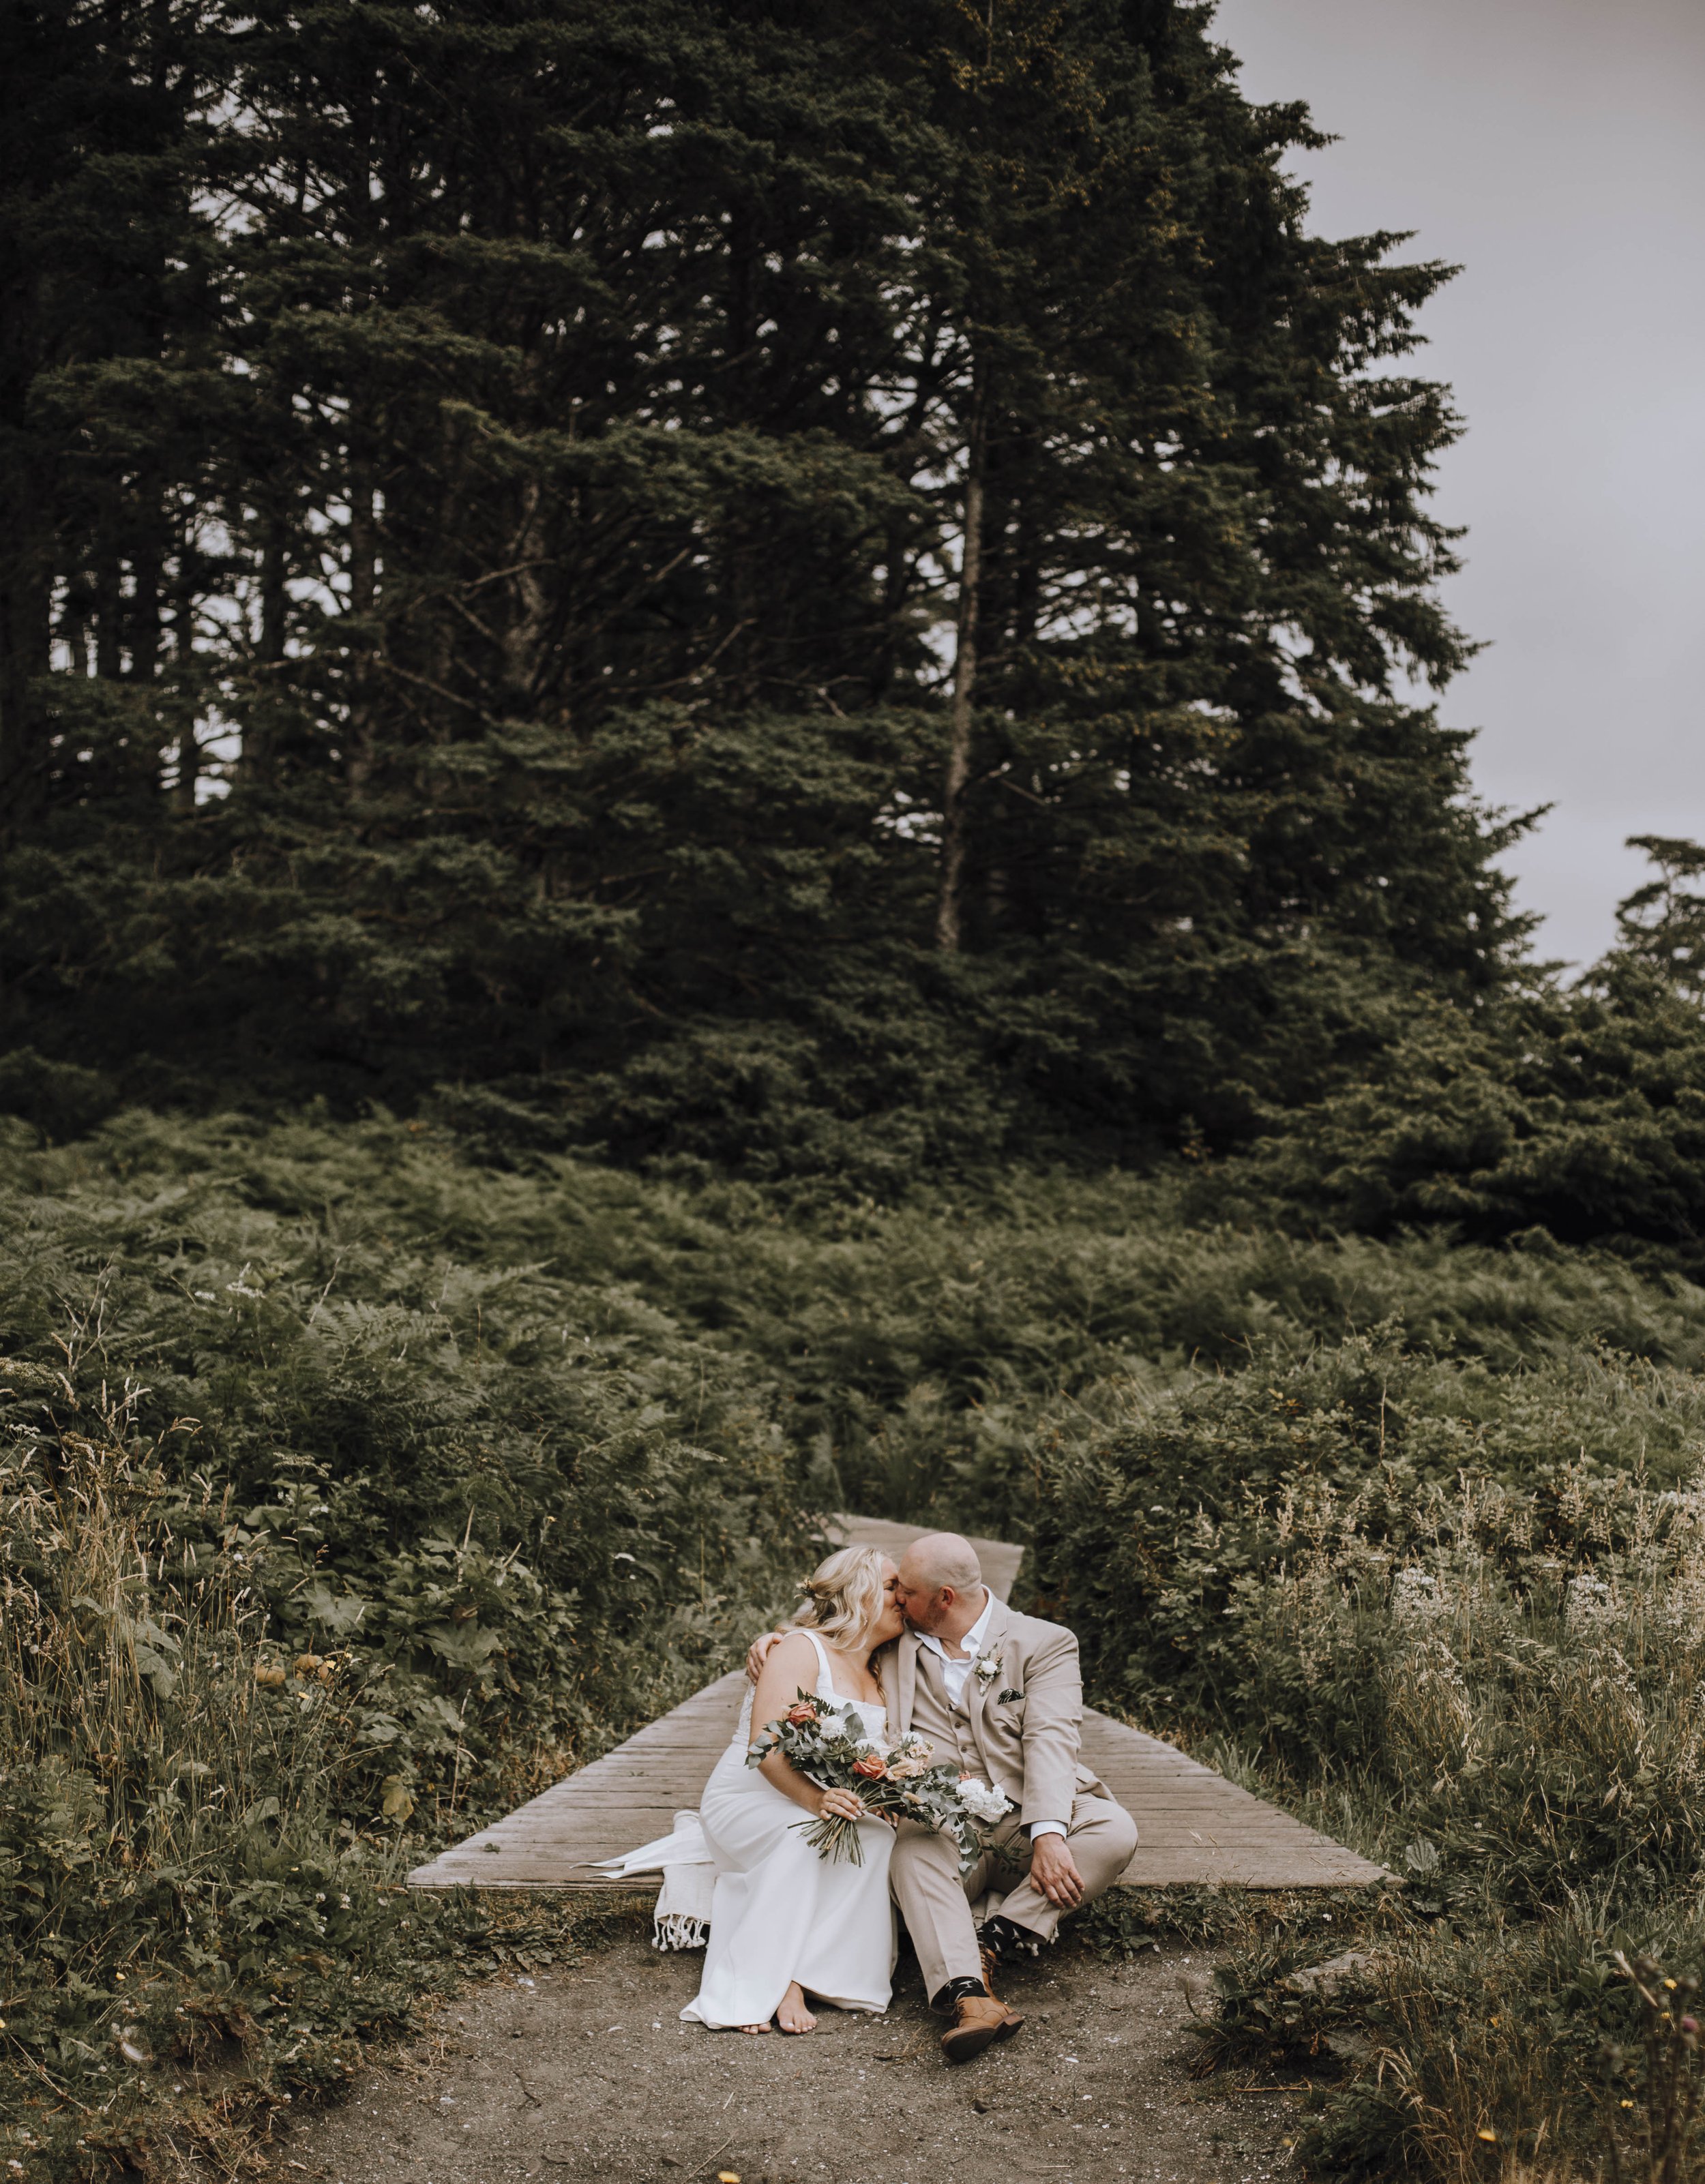 Jamie and Brad wedding - Tofino Vancouver Island British Columbia - Elyse Anna Photography-9321.jpg